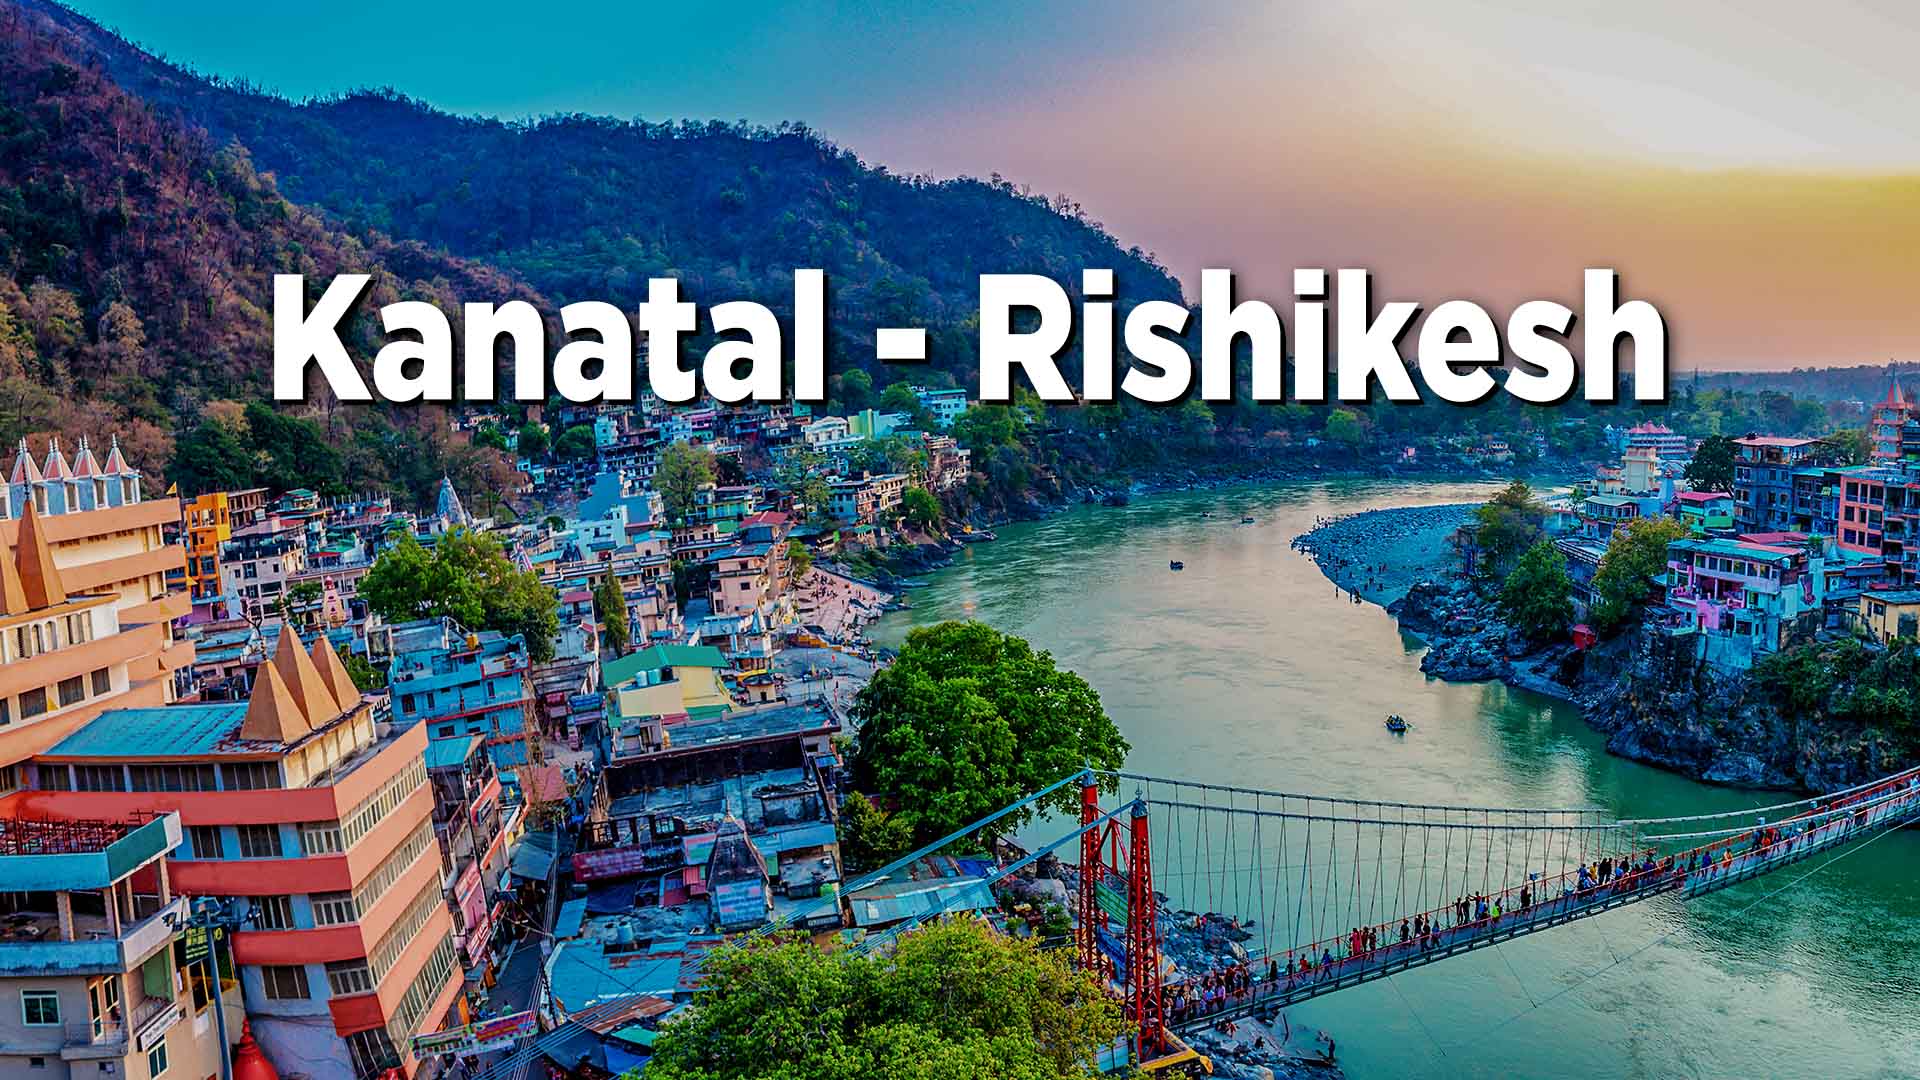 wanderon-kanatal-rishikesh-trip